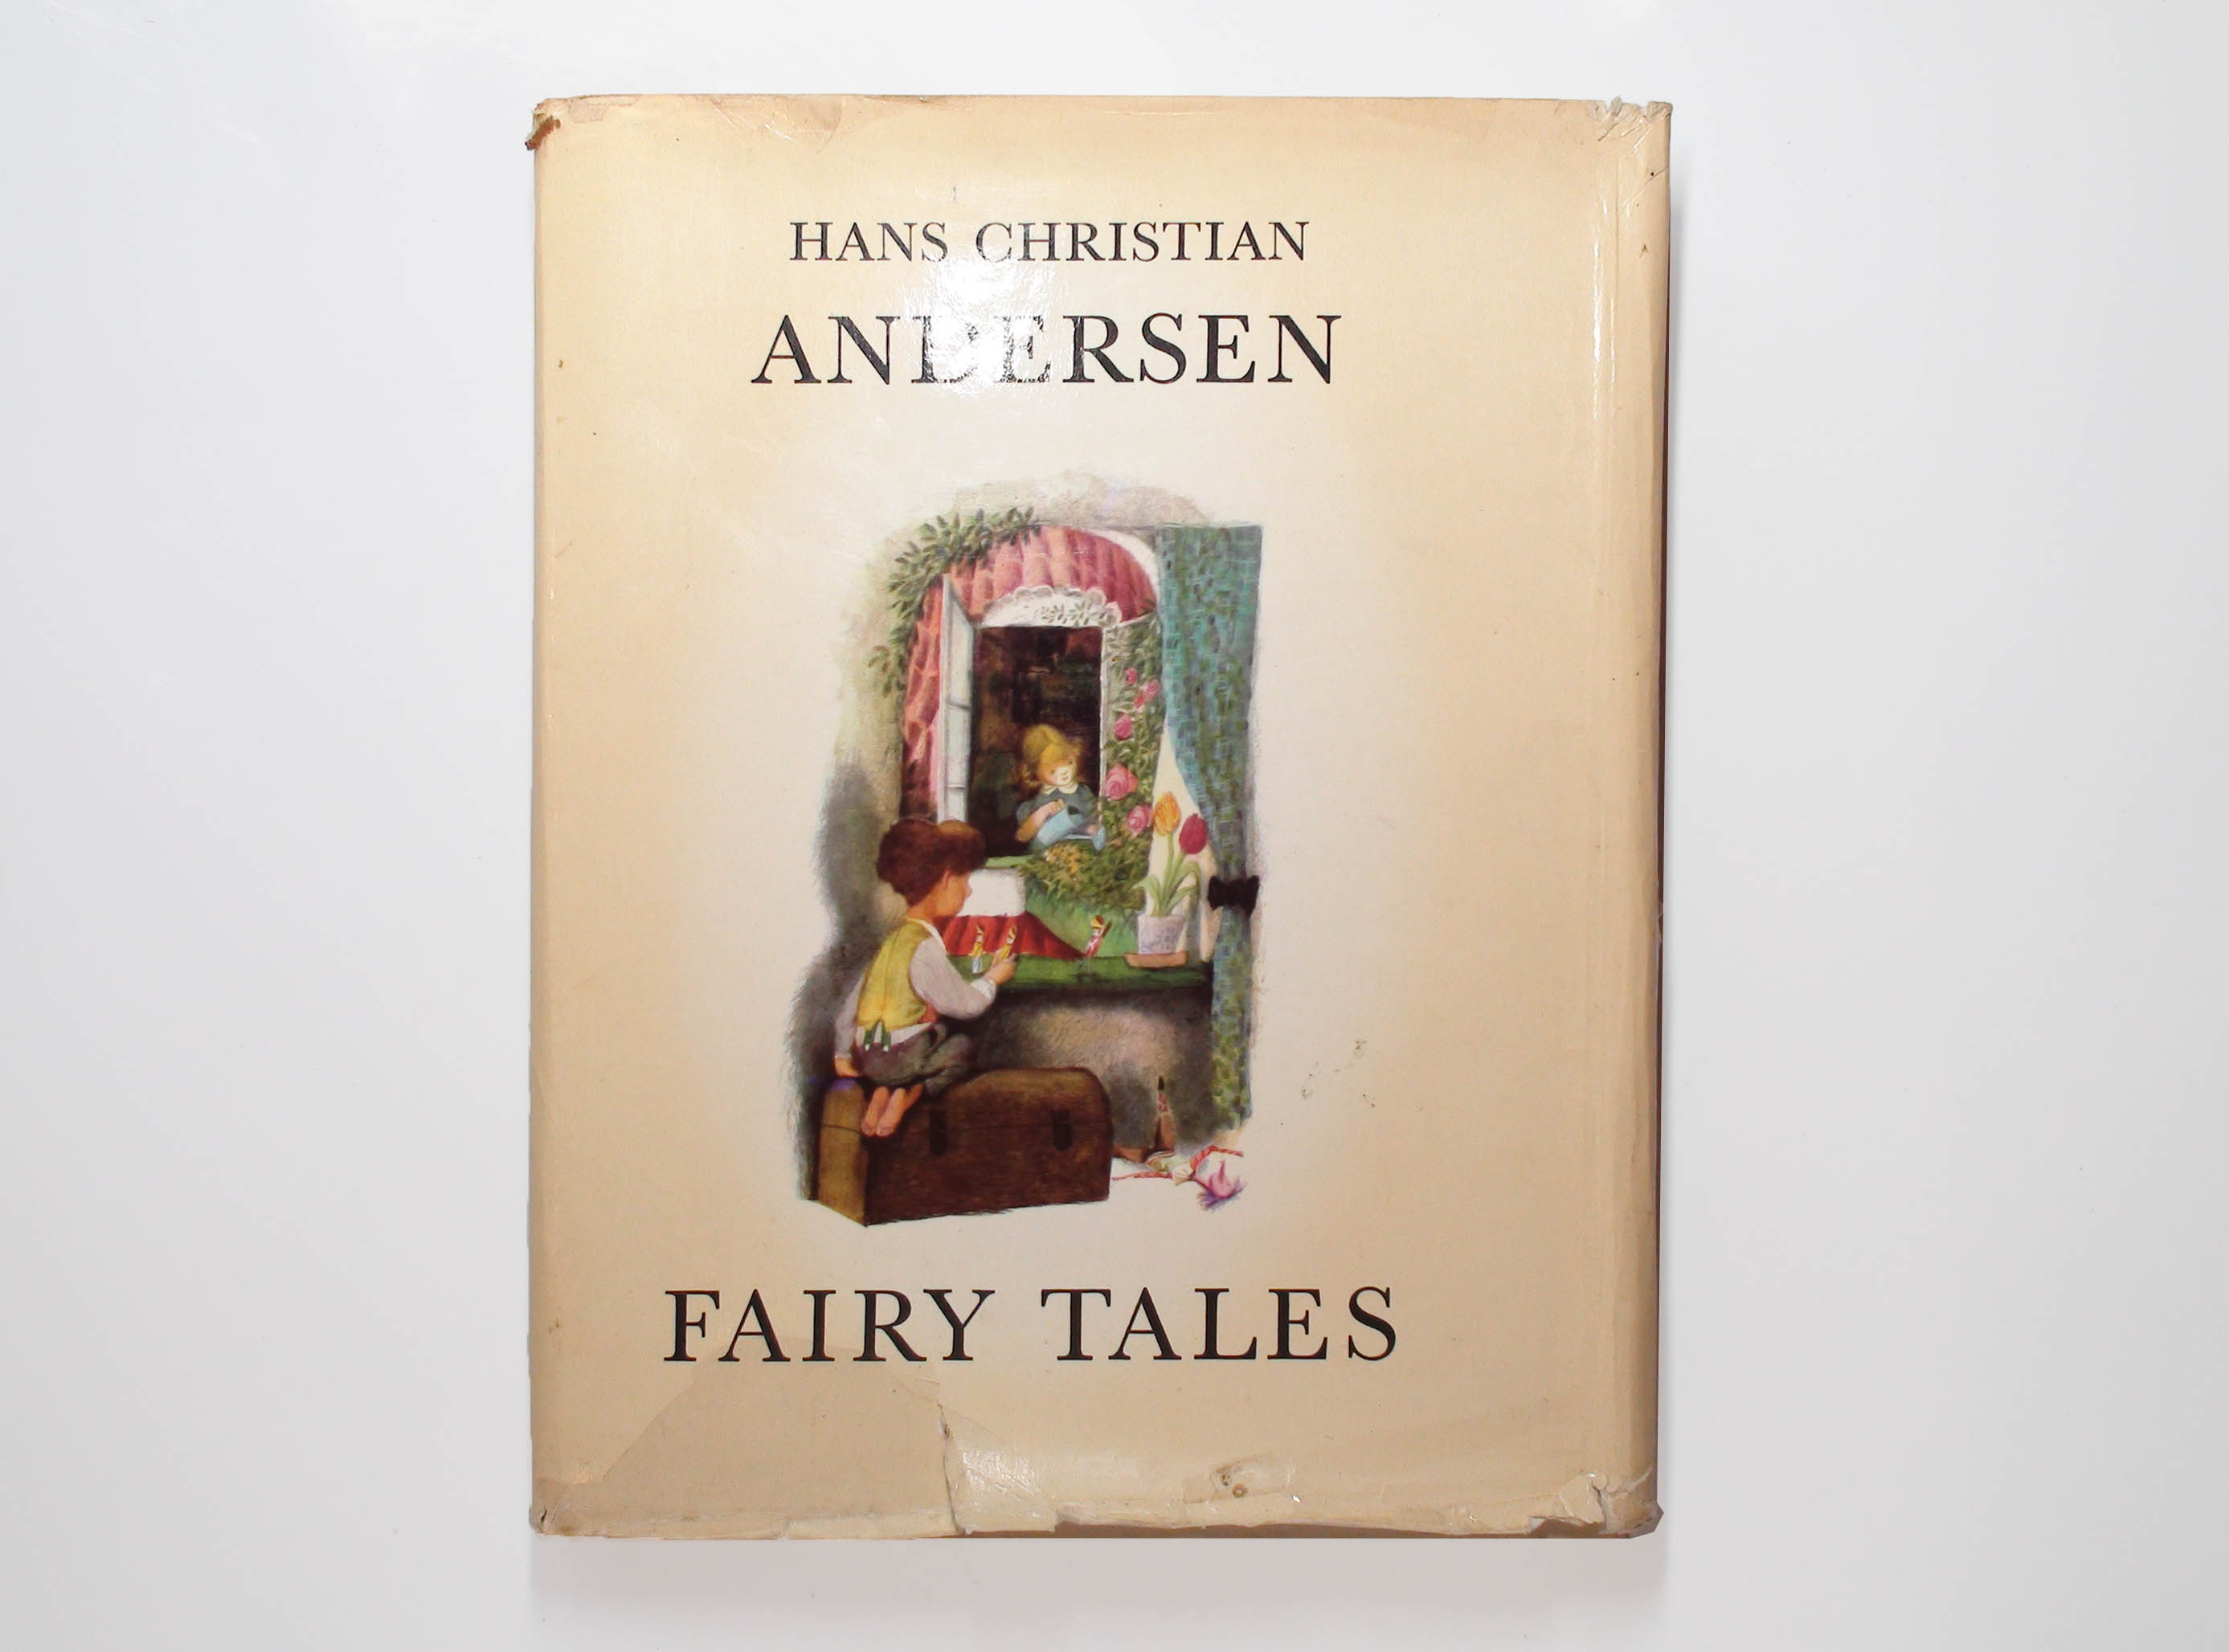 Hans Christian Andersen Fairy Tales, Illustrated by Jiri Trnka, 7th Impression, w/ Dust Jacket, 1967